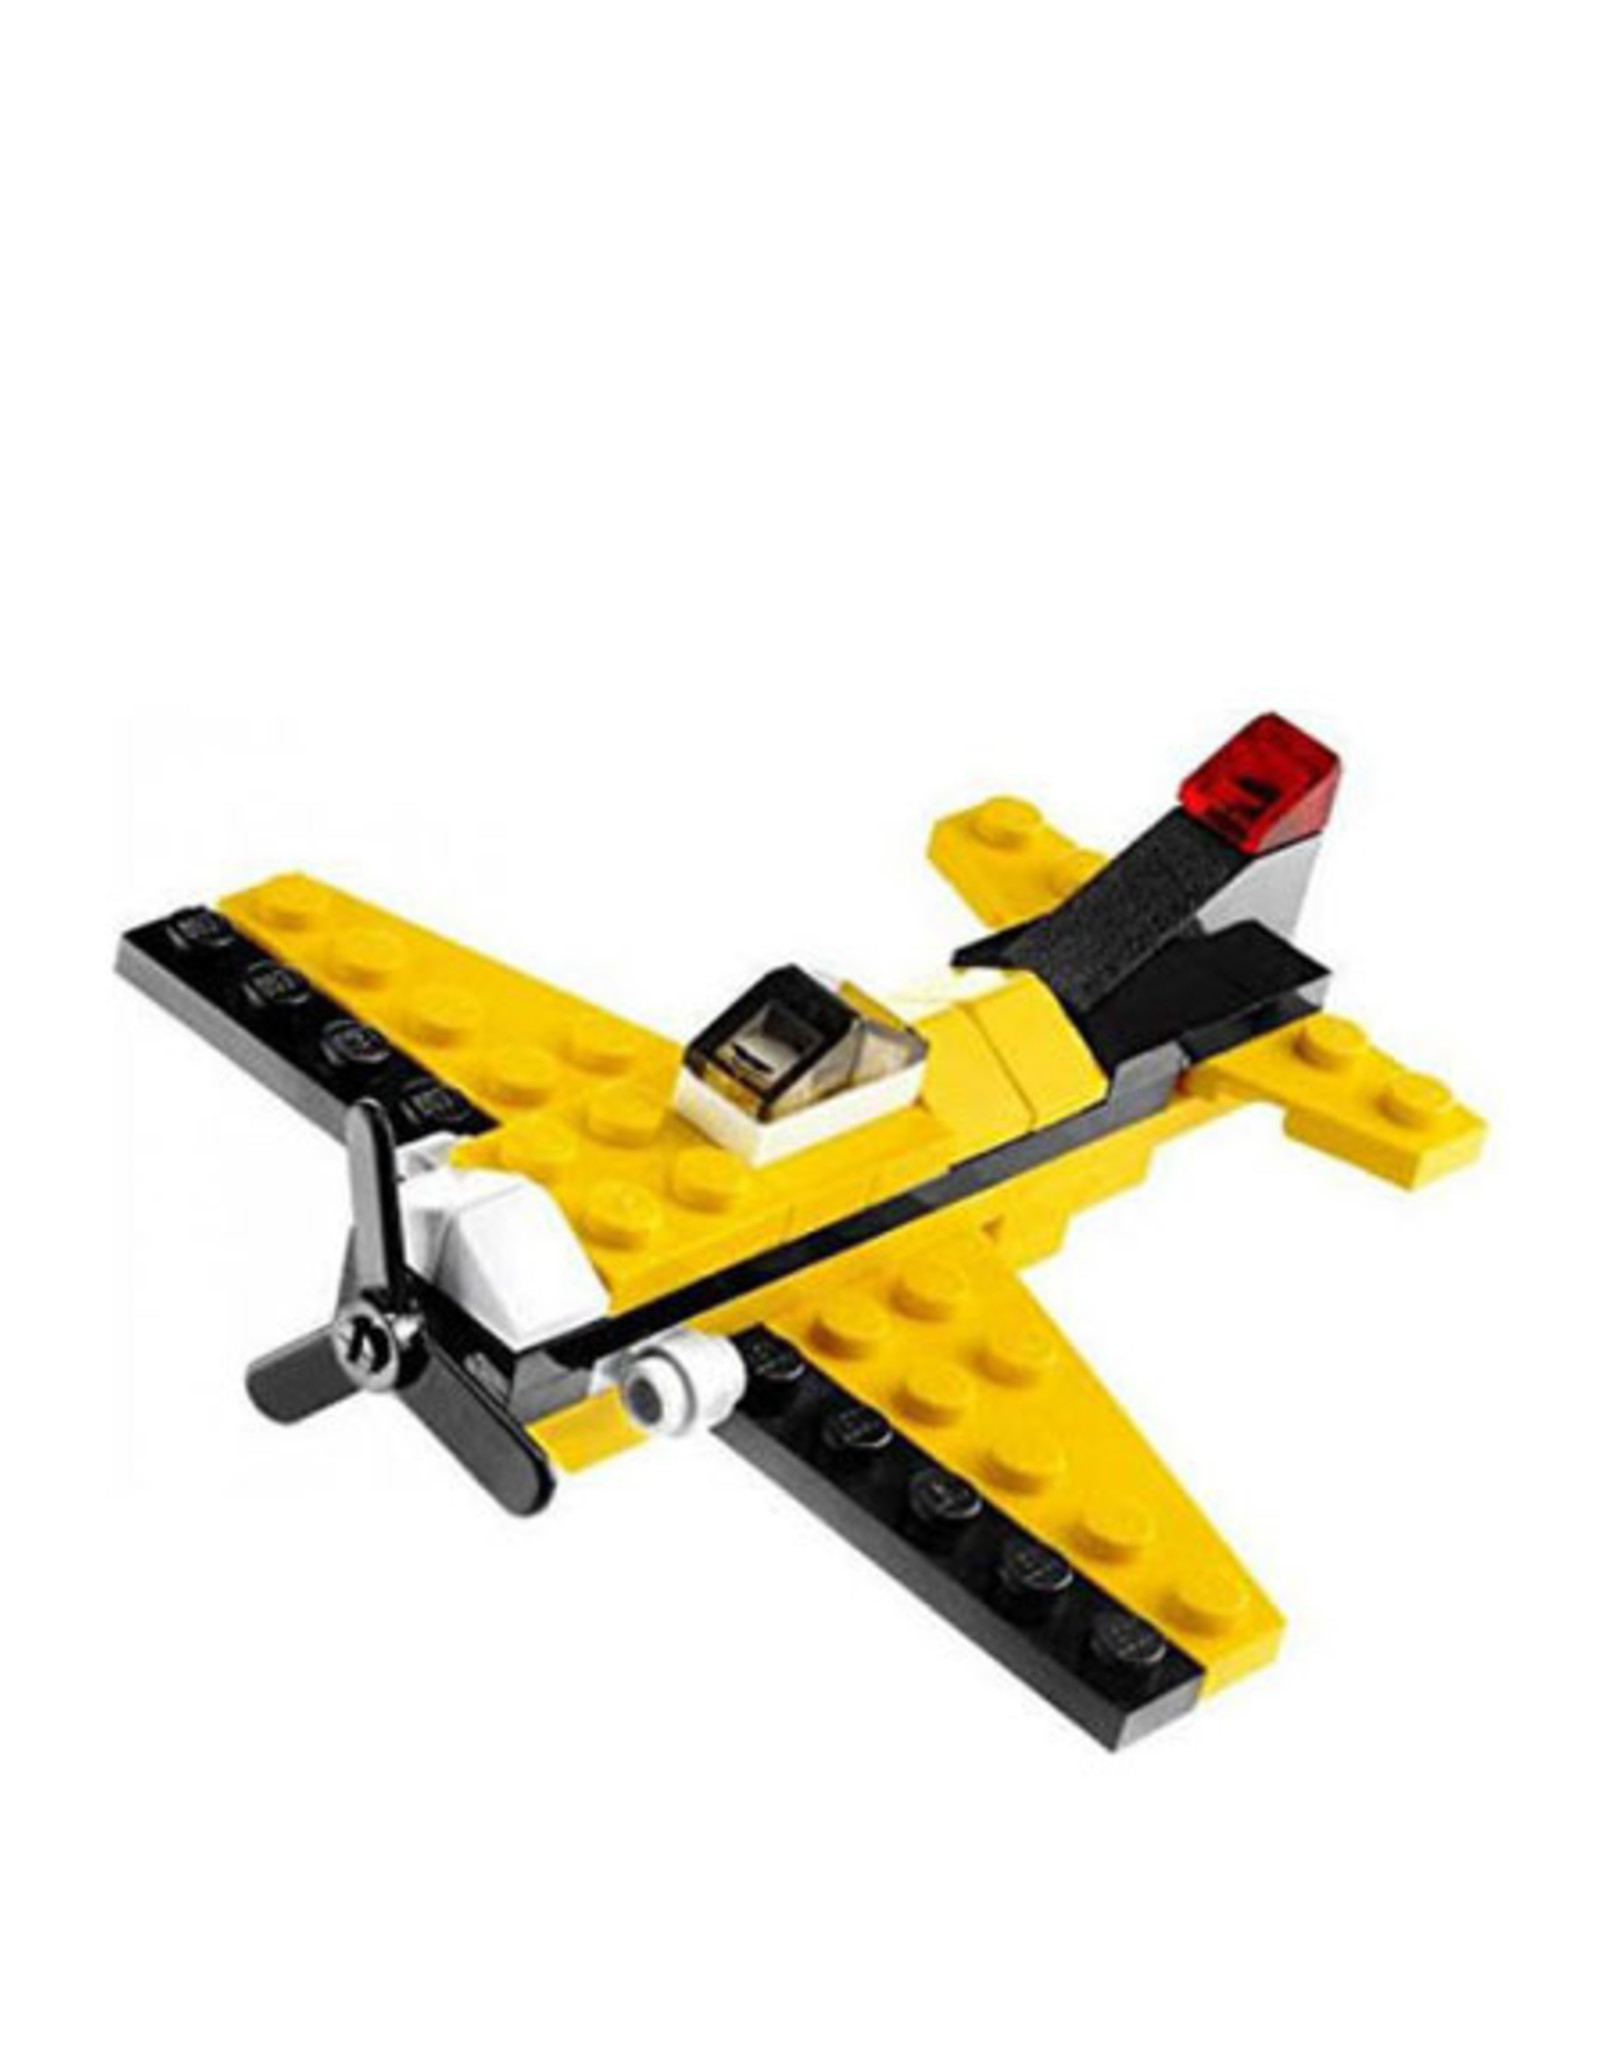 LEGO LEGO 7808 Yellow Airplane CREATOR